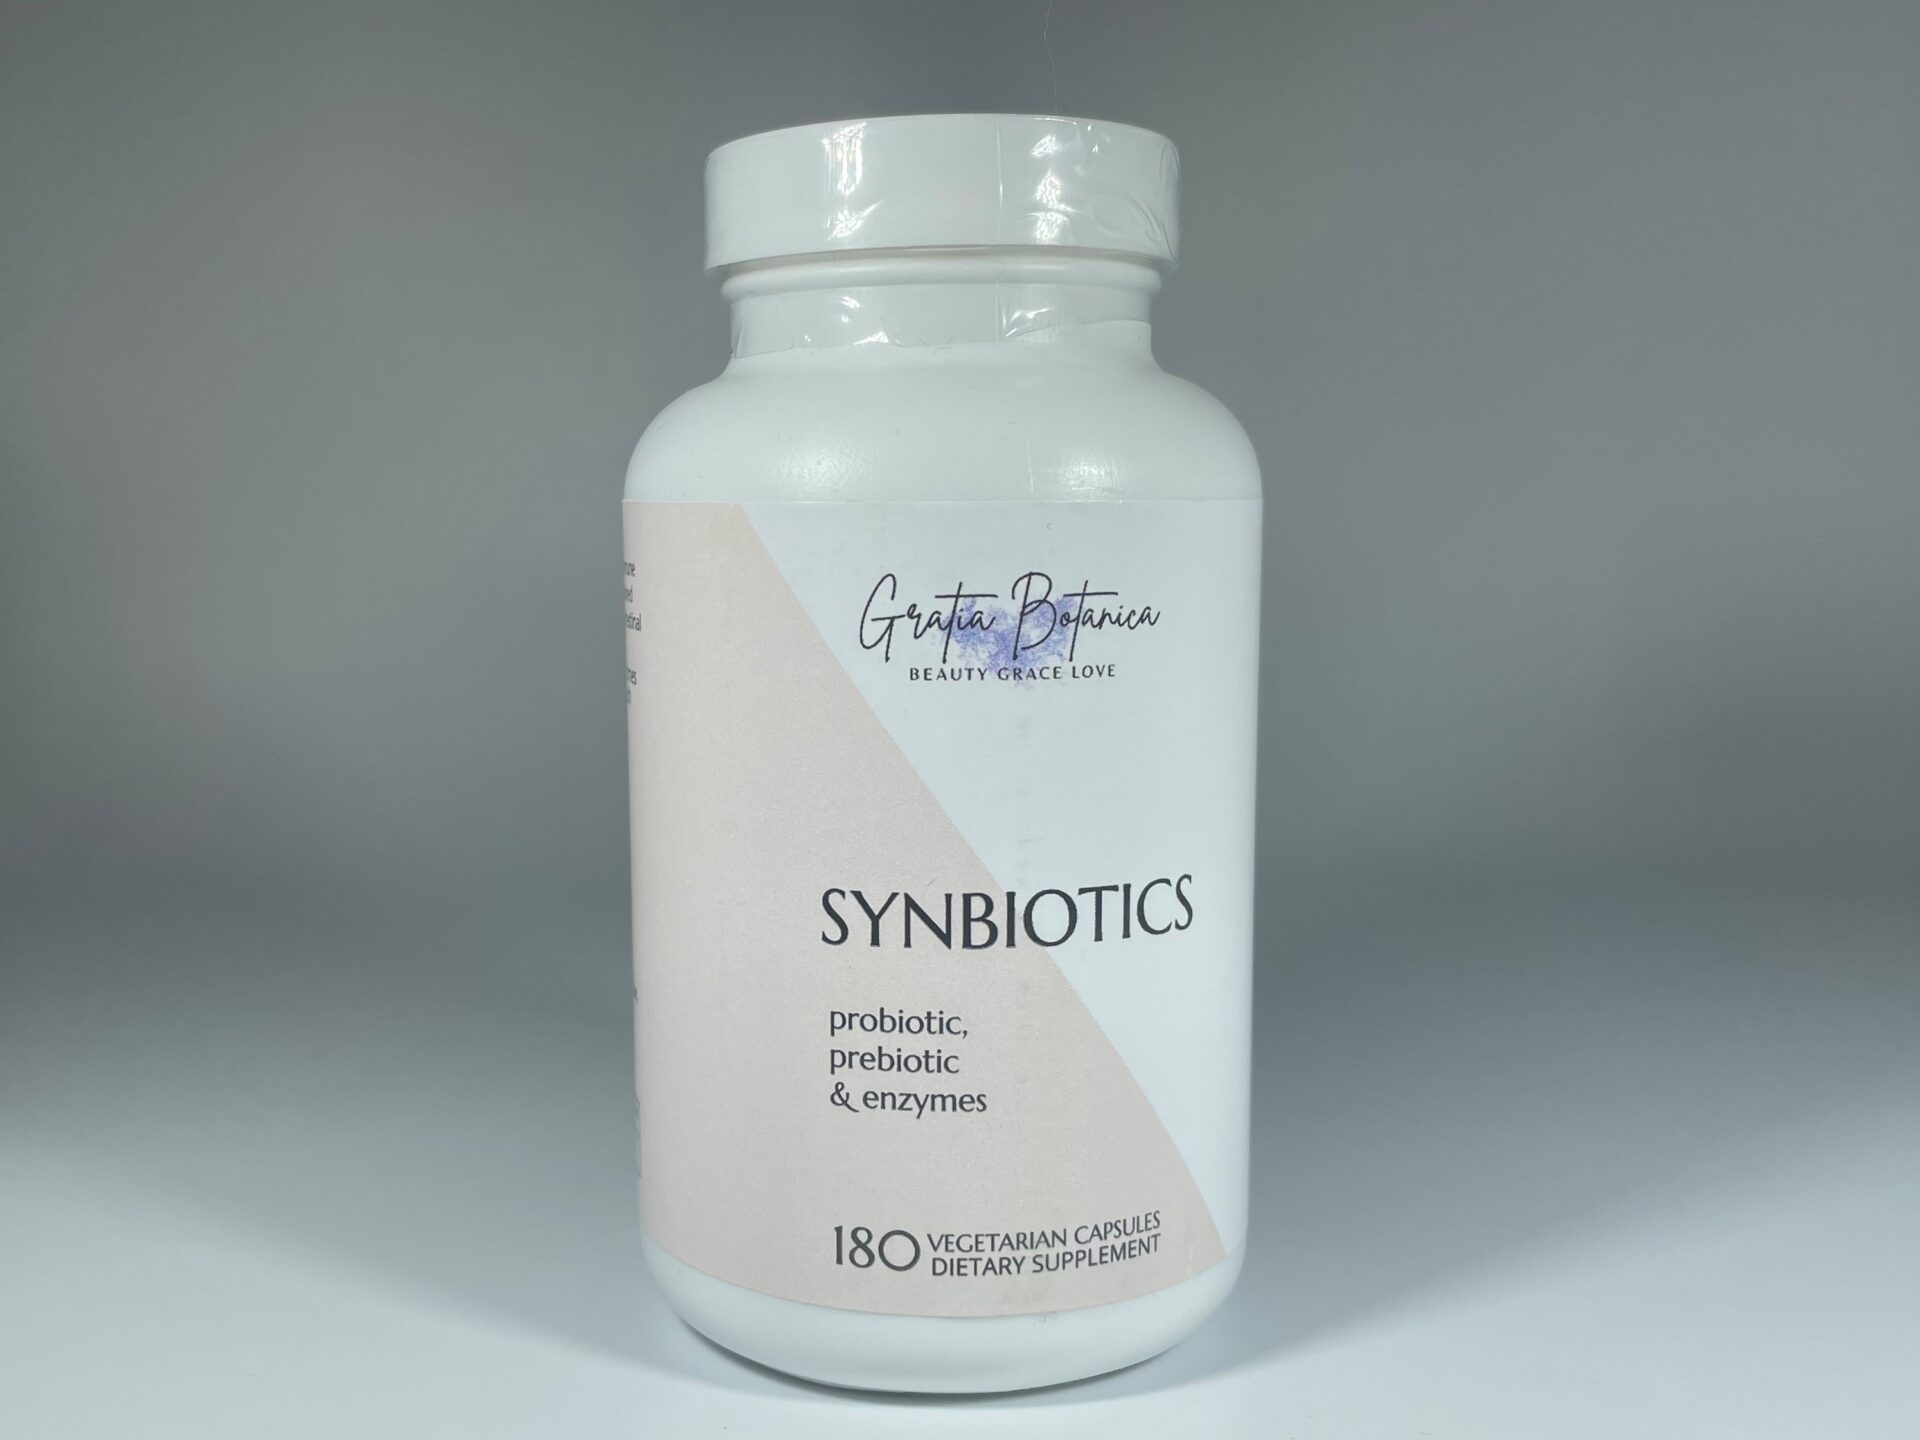 Synbiotics